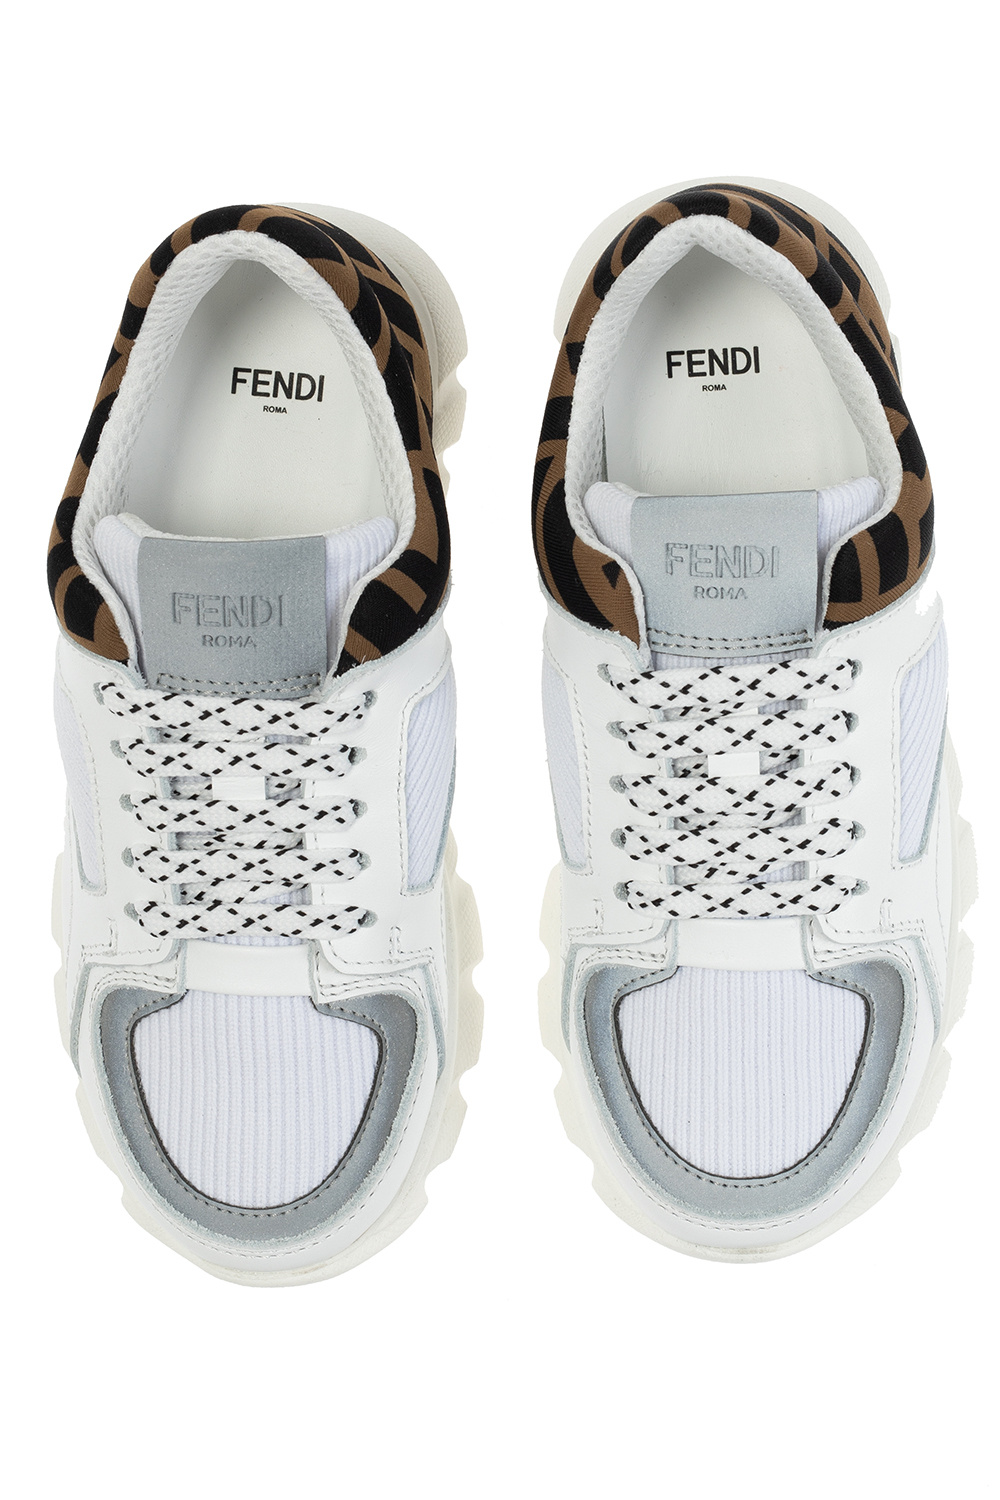 Fendi Kids Multicolor Unisex Sneakers - Size: 33